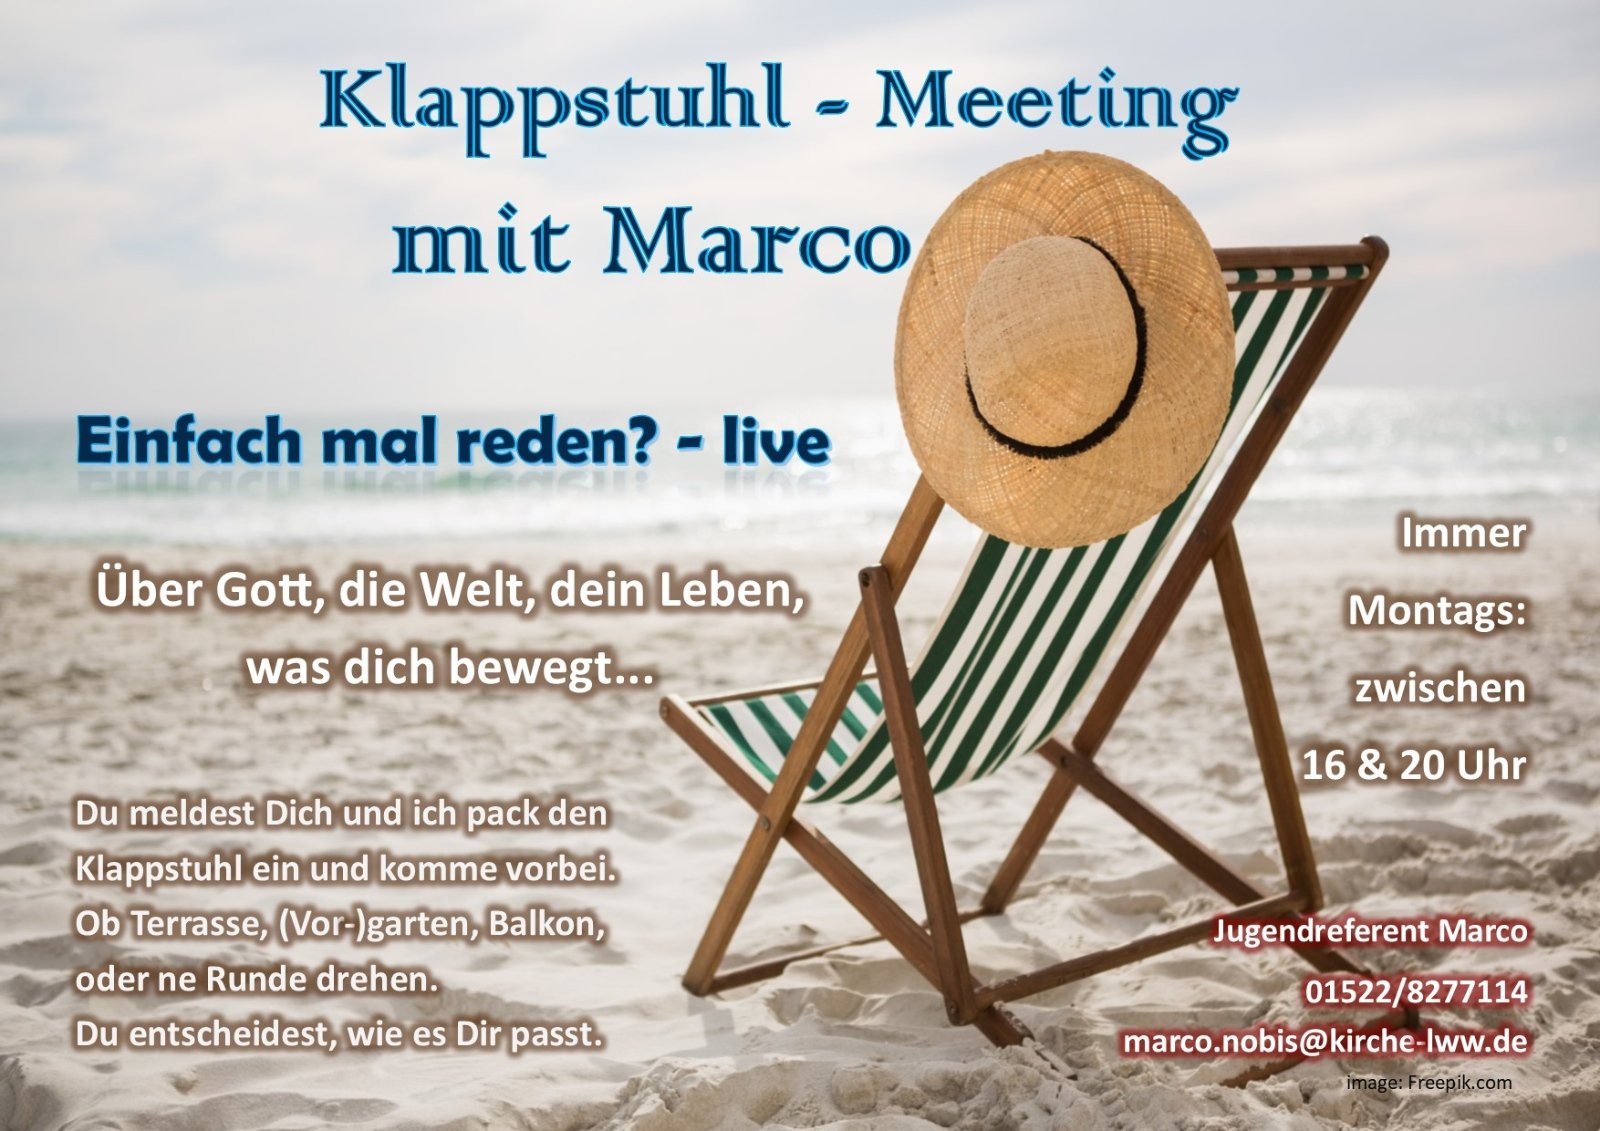 Klappstuhl Meeting (c) <a href=https://www.freepik.com/photos/travel>Travel photo created by awesomecontent - www.freepik.com</a> / bearbeitet von Marco Nobis